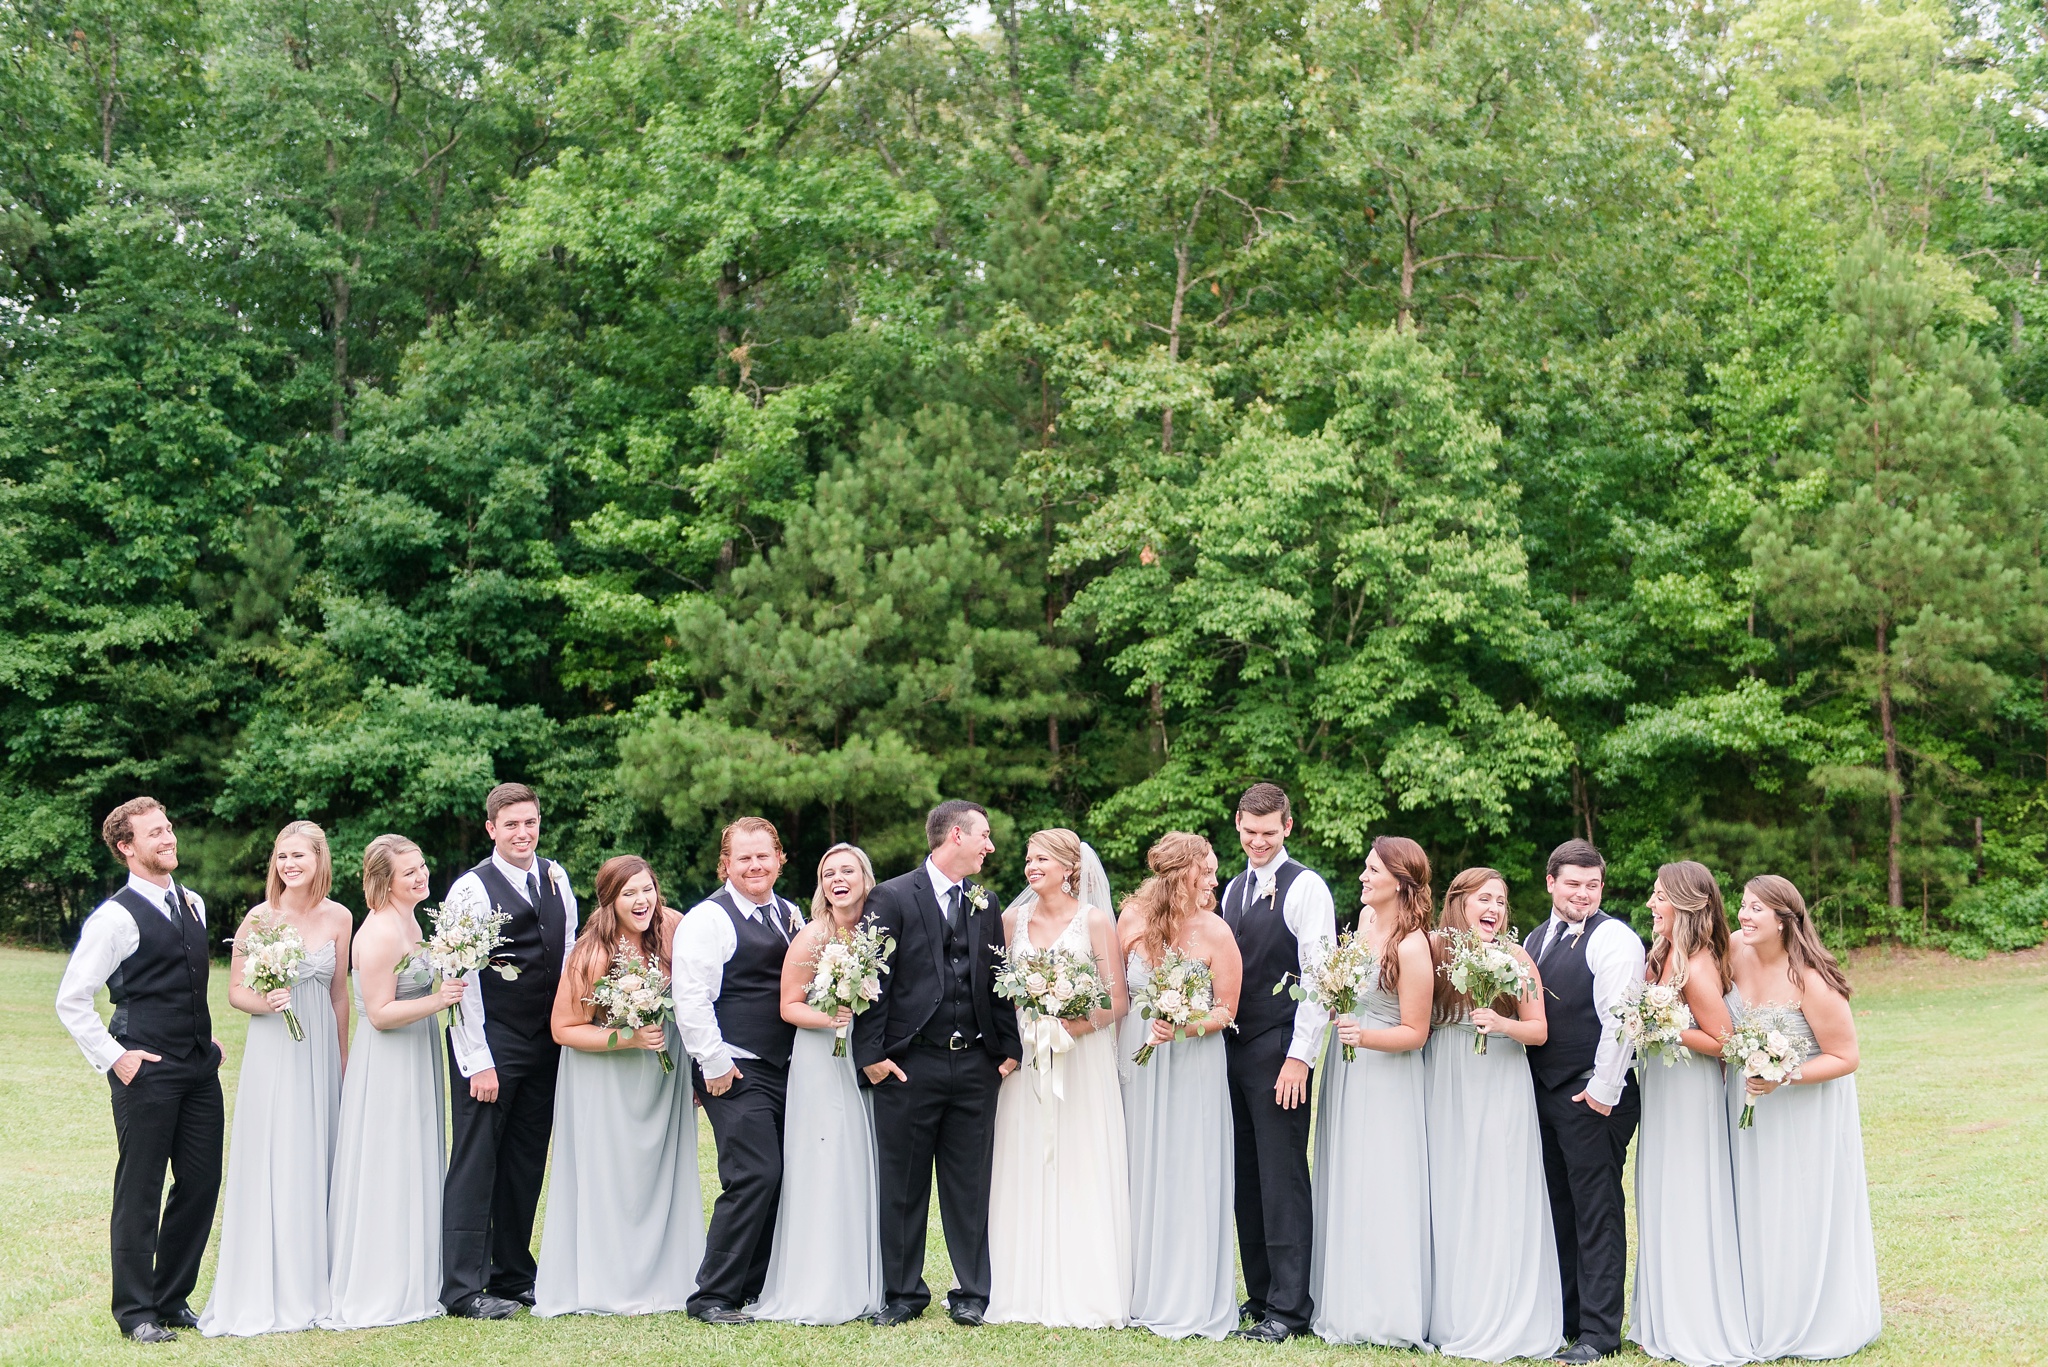 Gray and Black Classic Outdoor Wedding | Birmingham Alabama Wedding Photographers_0037.jpg